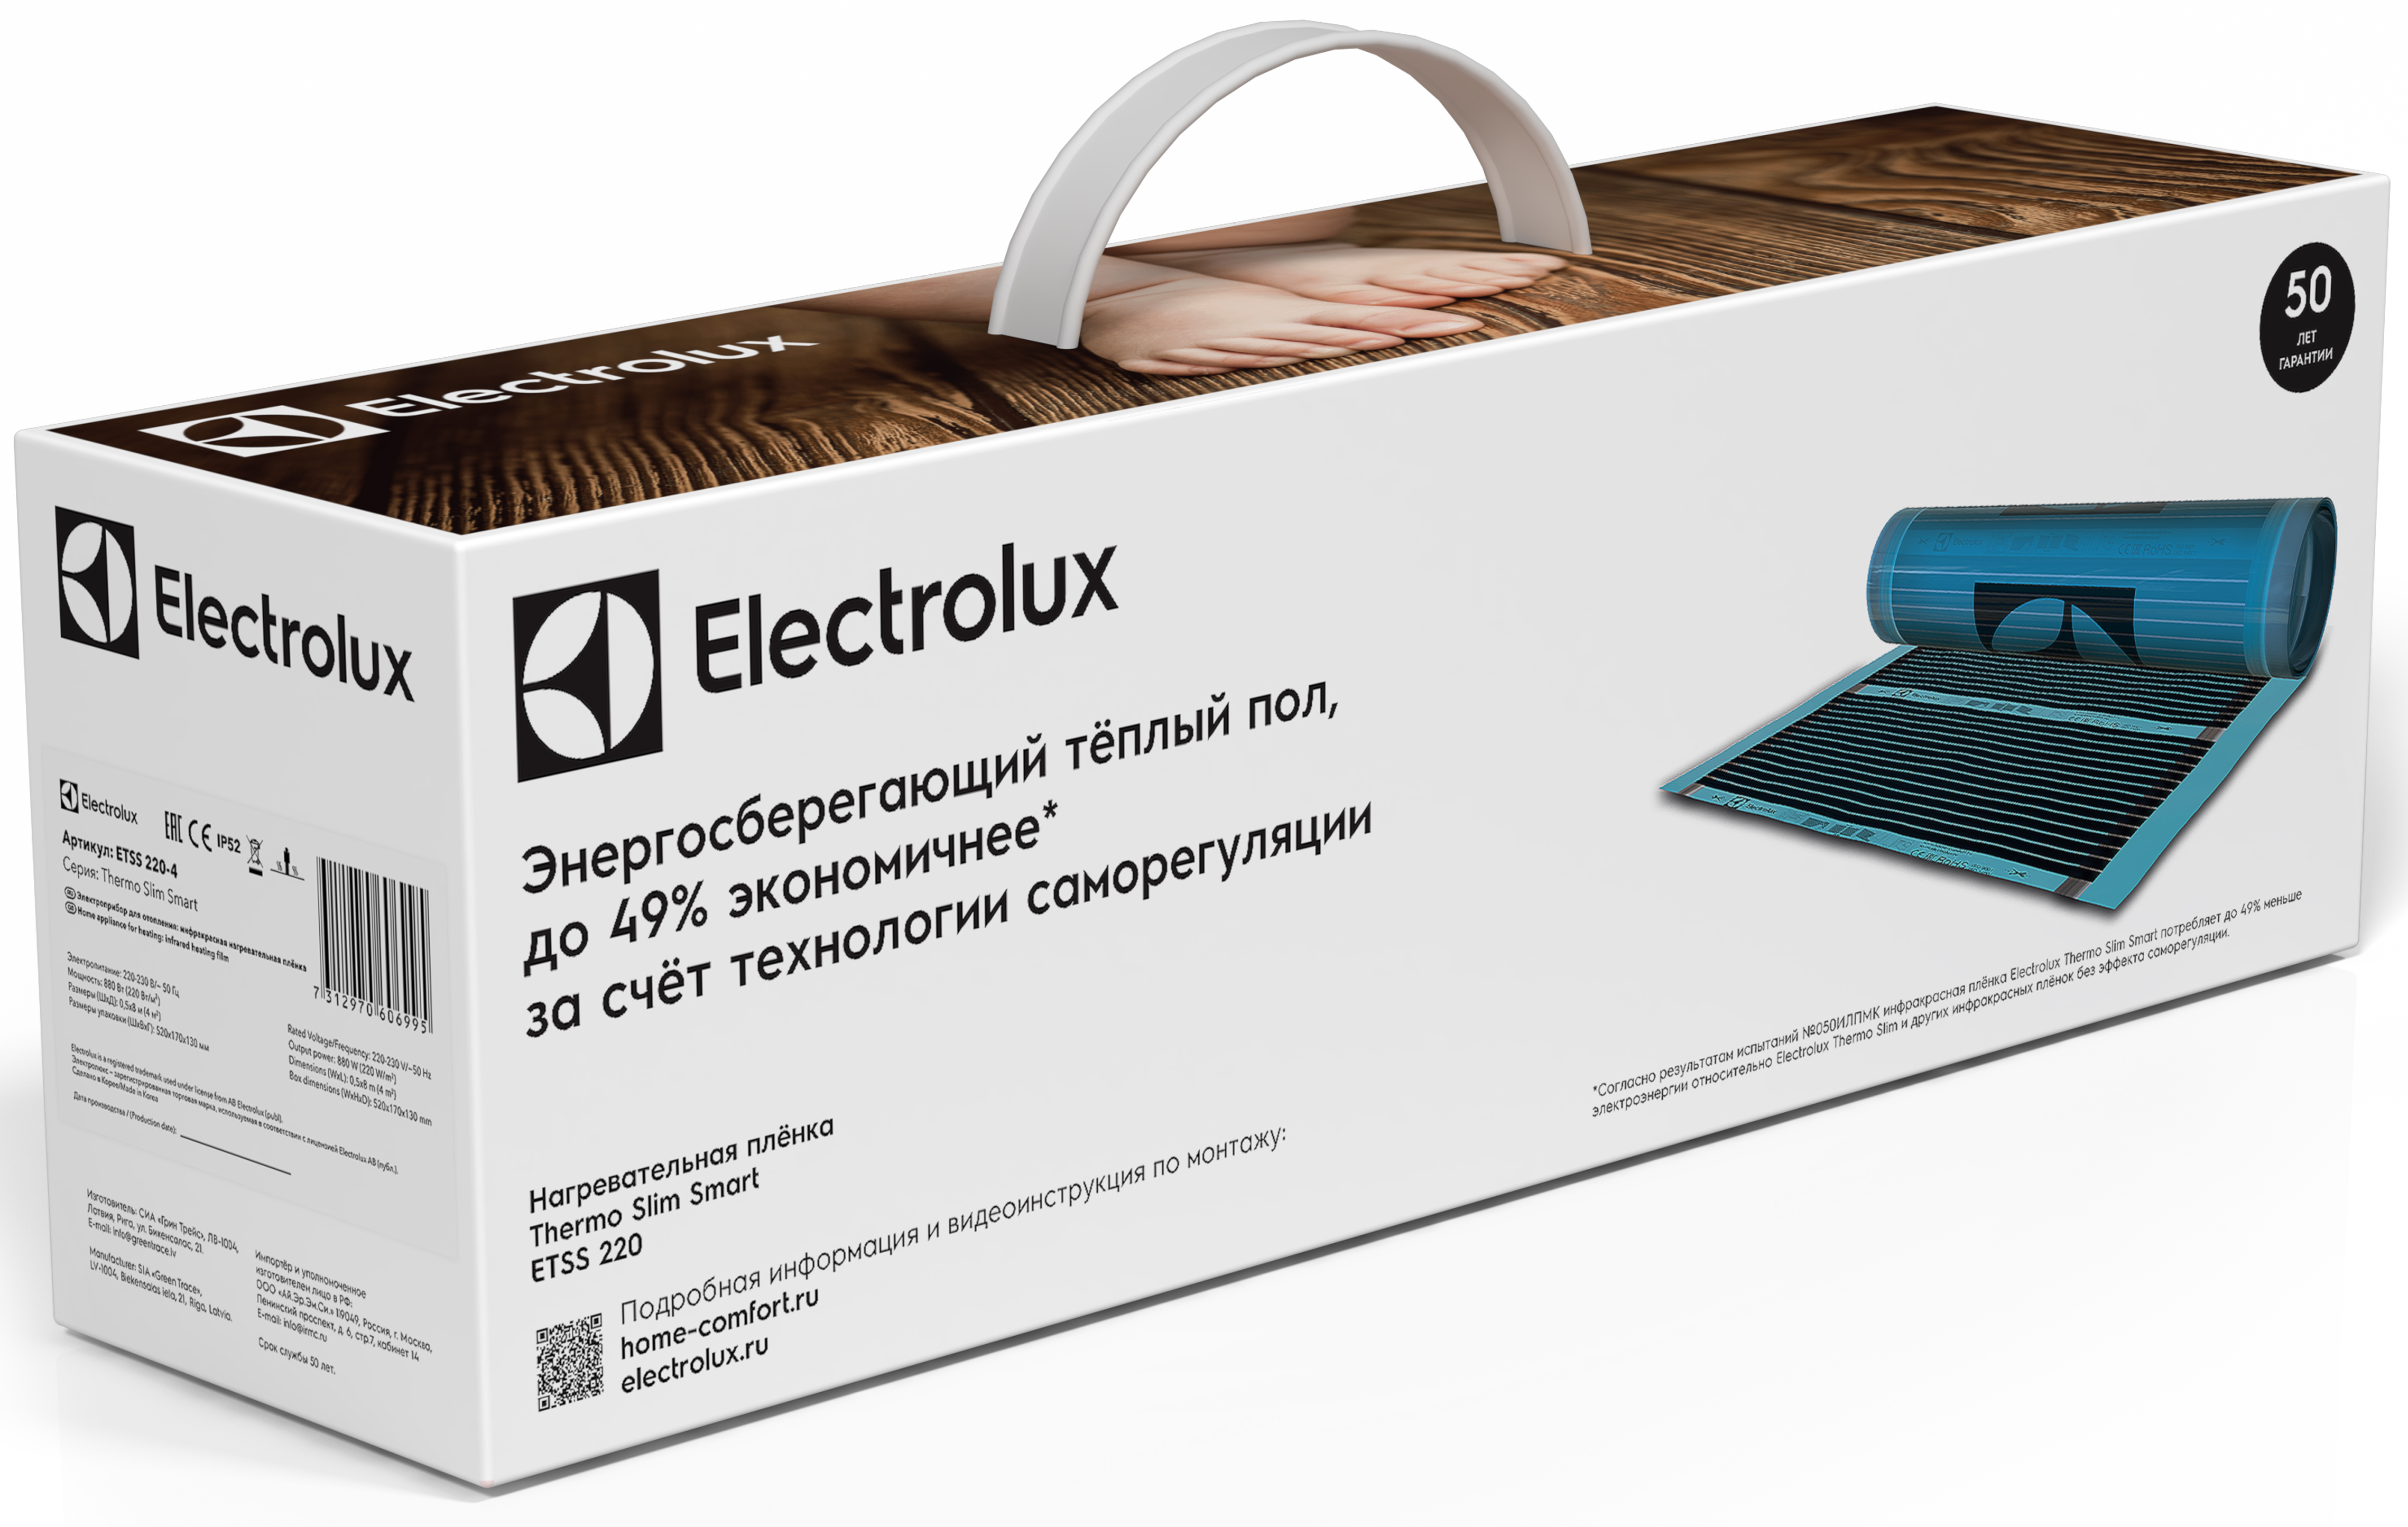 Тепла підлога Electrolux під паркет Electrolux Thermo Slim Smart ETSS 220-6